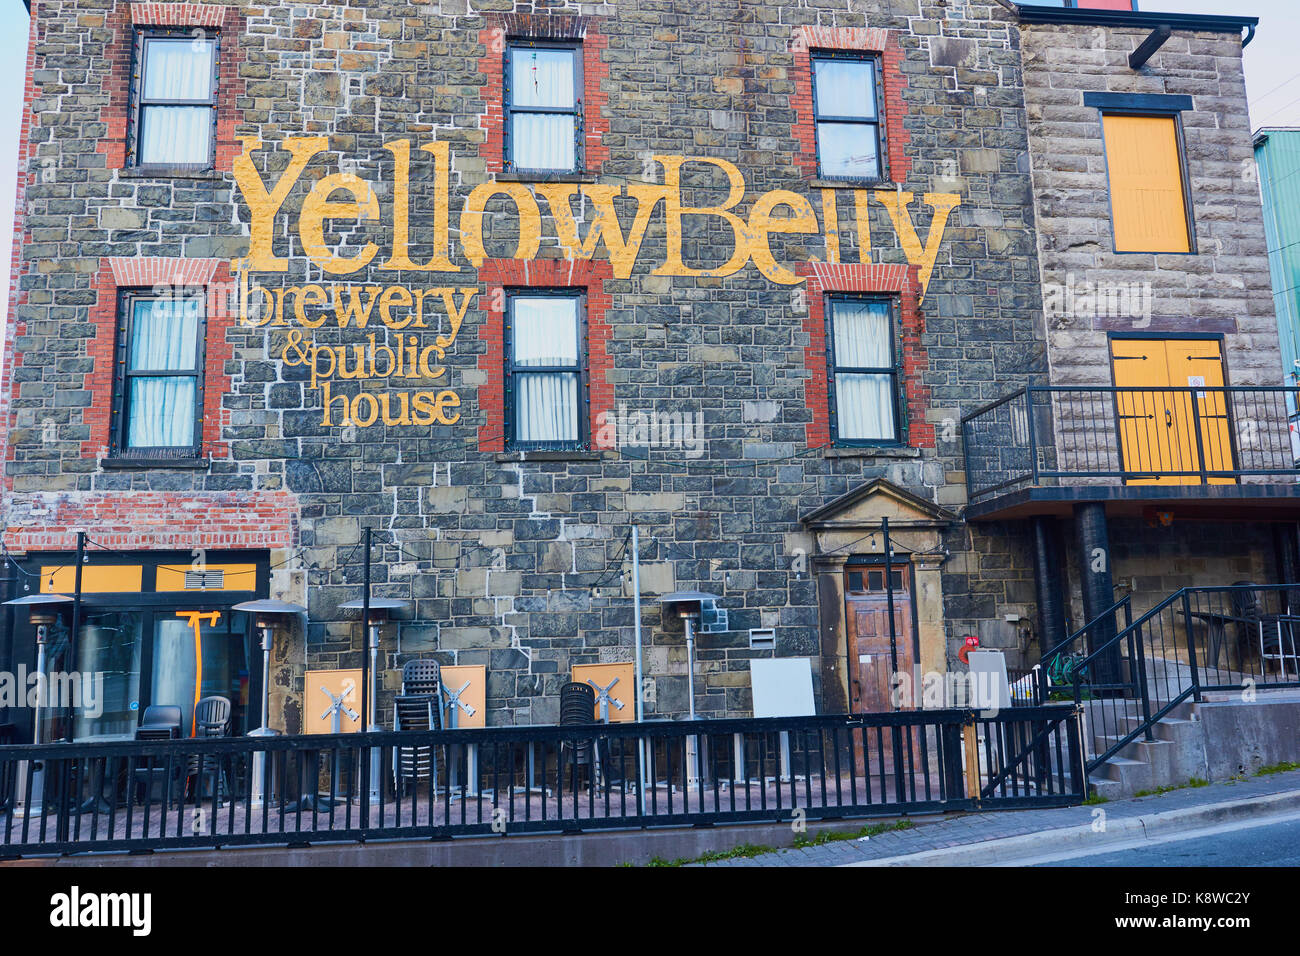 Vientre amarillo Brewery y public house, St John's, Newfoundland, Canadá Foto de stock